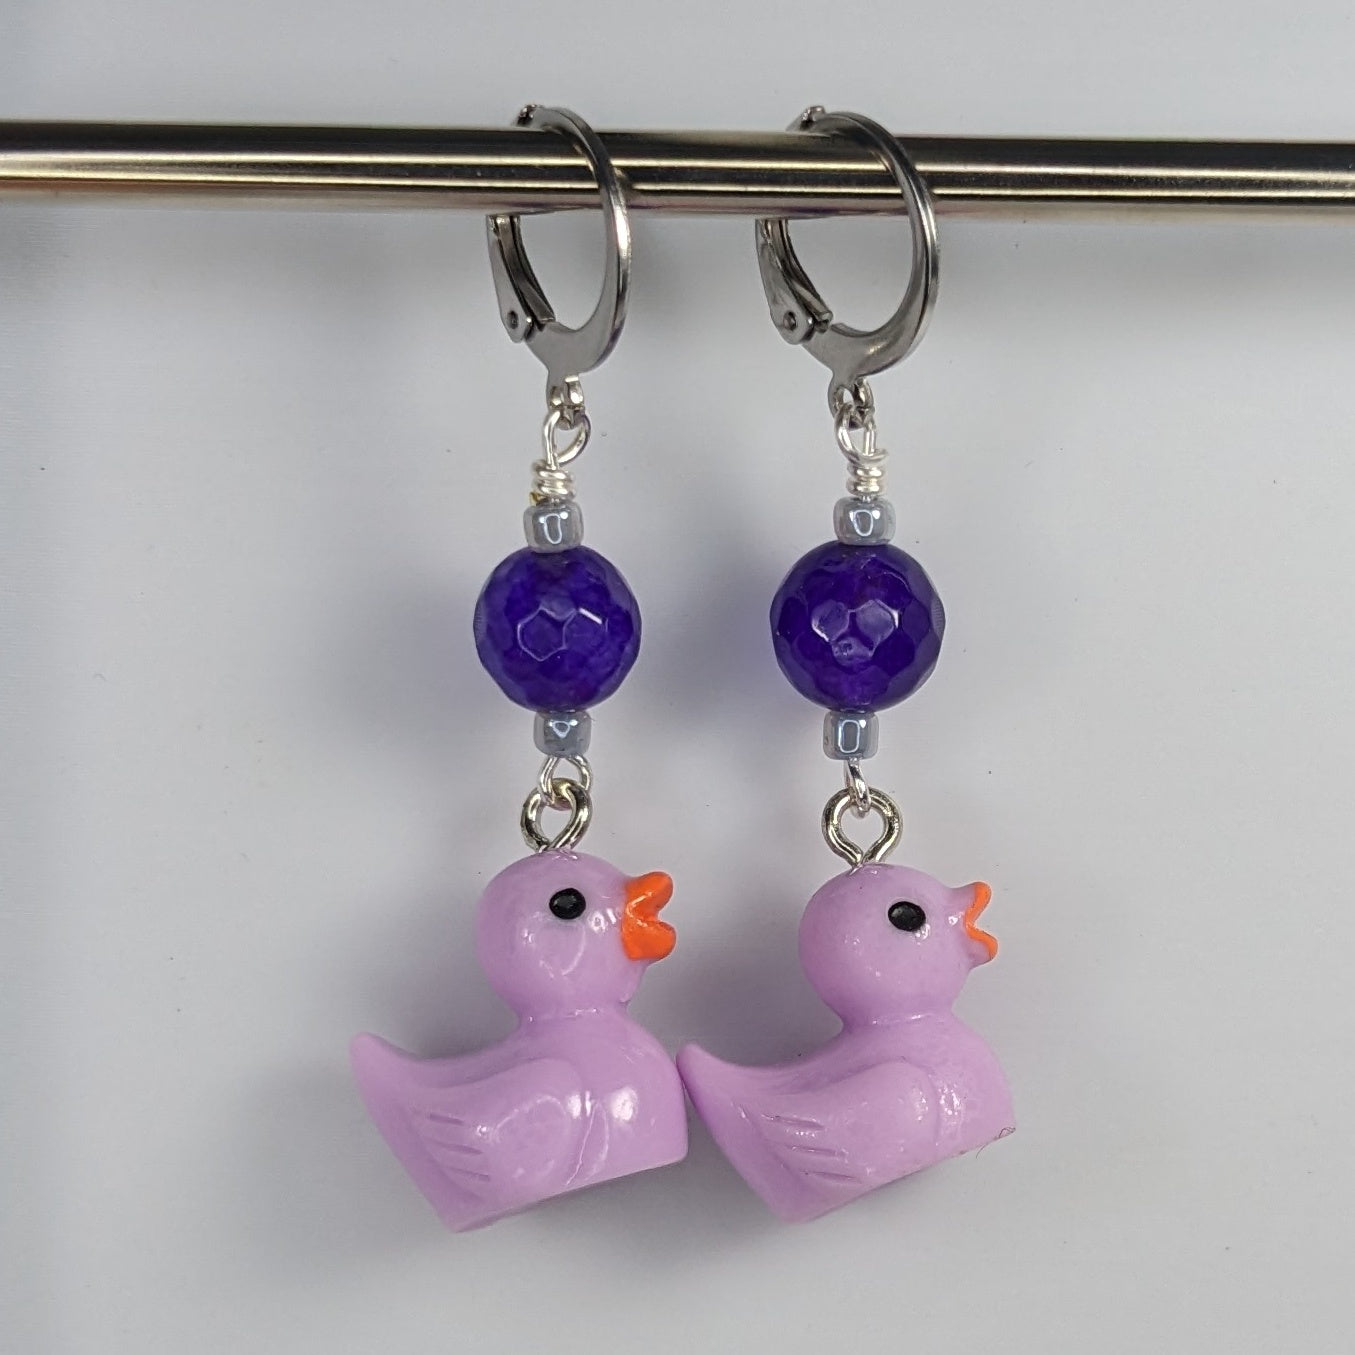 Resin Rubber Duckie Stitch Markers & Earrings